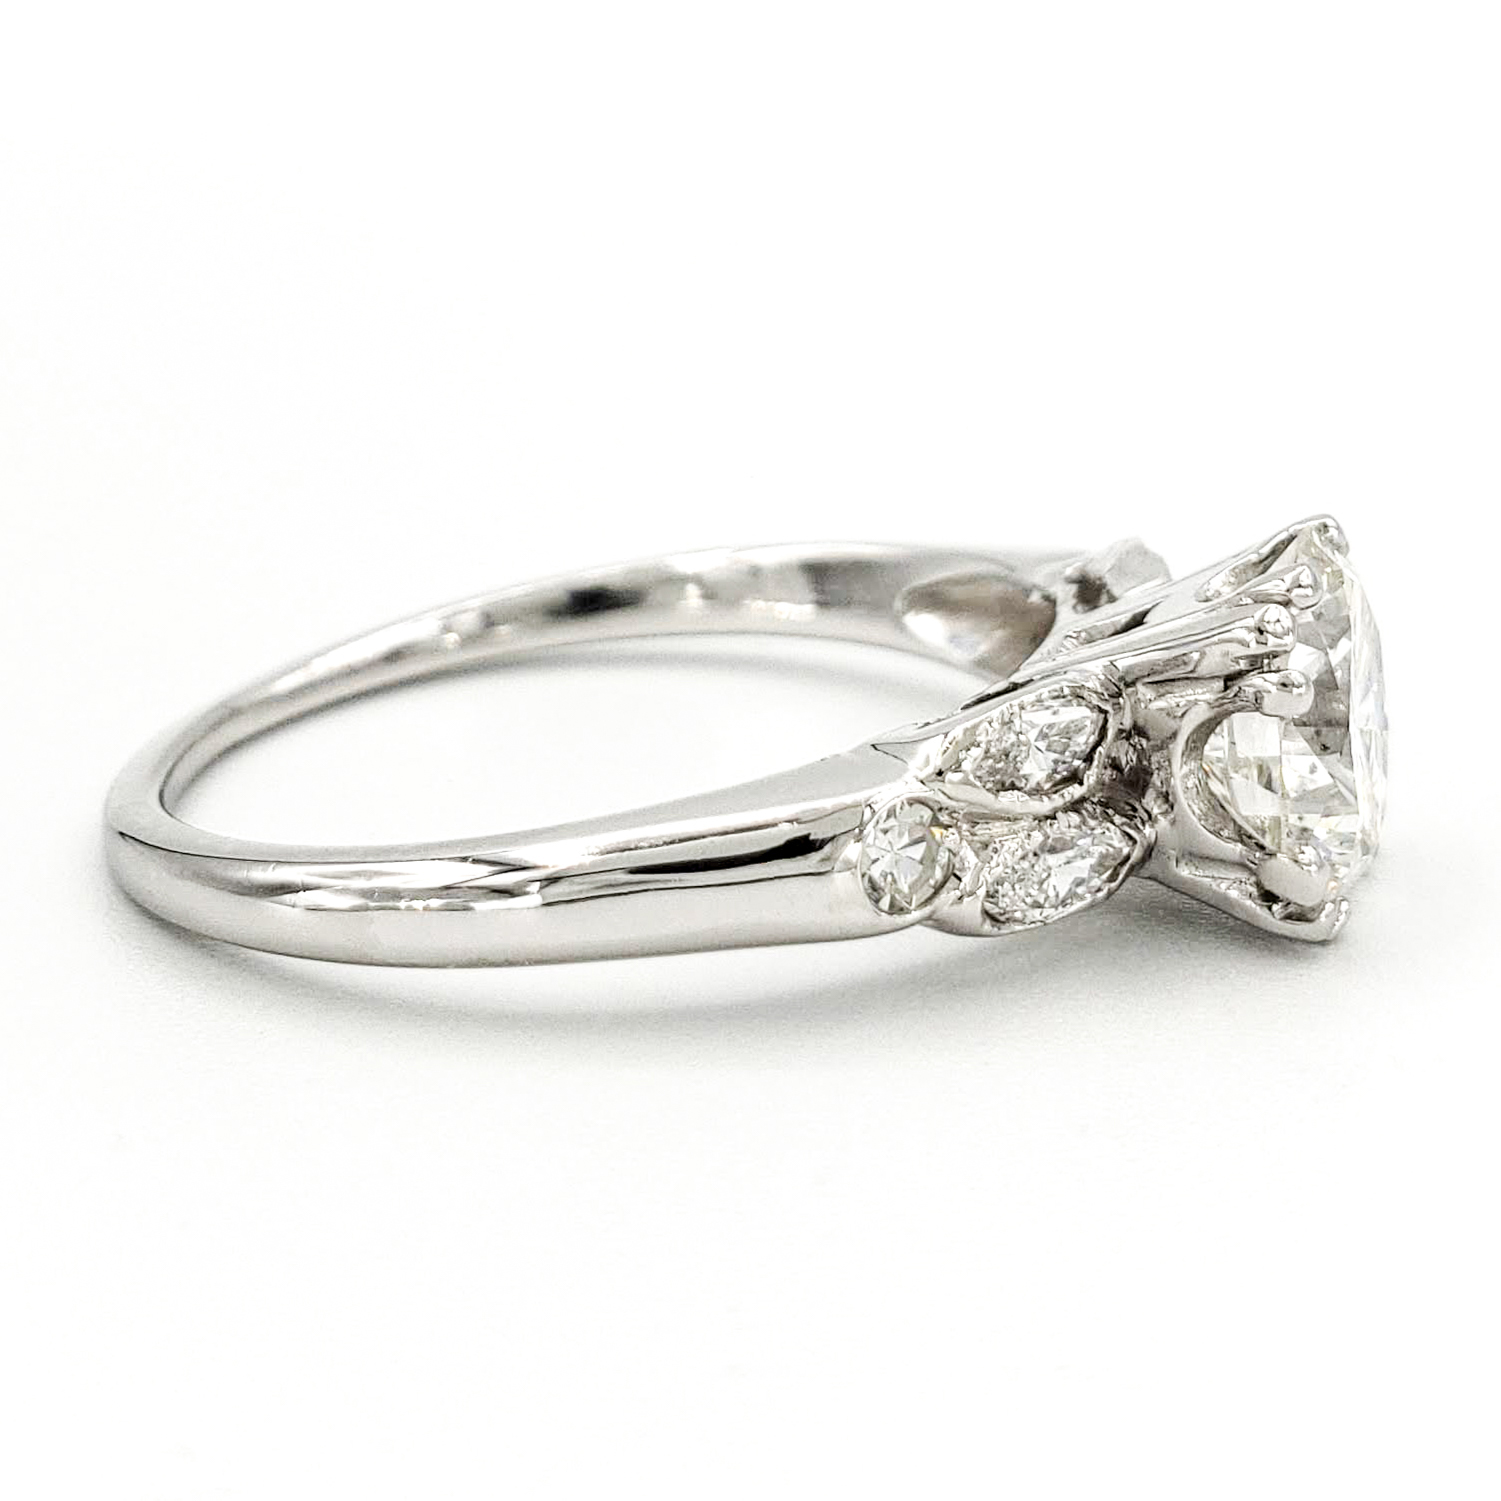 vintage-platinum-engagement-ring-with-1-22-carat-round-brilliant-cut-diamond-egl-g-si1